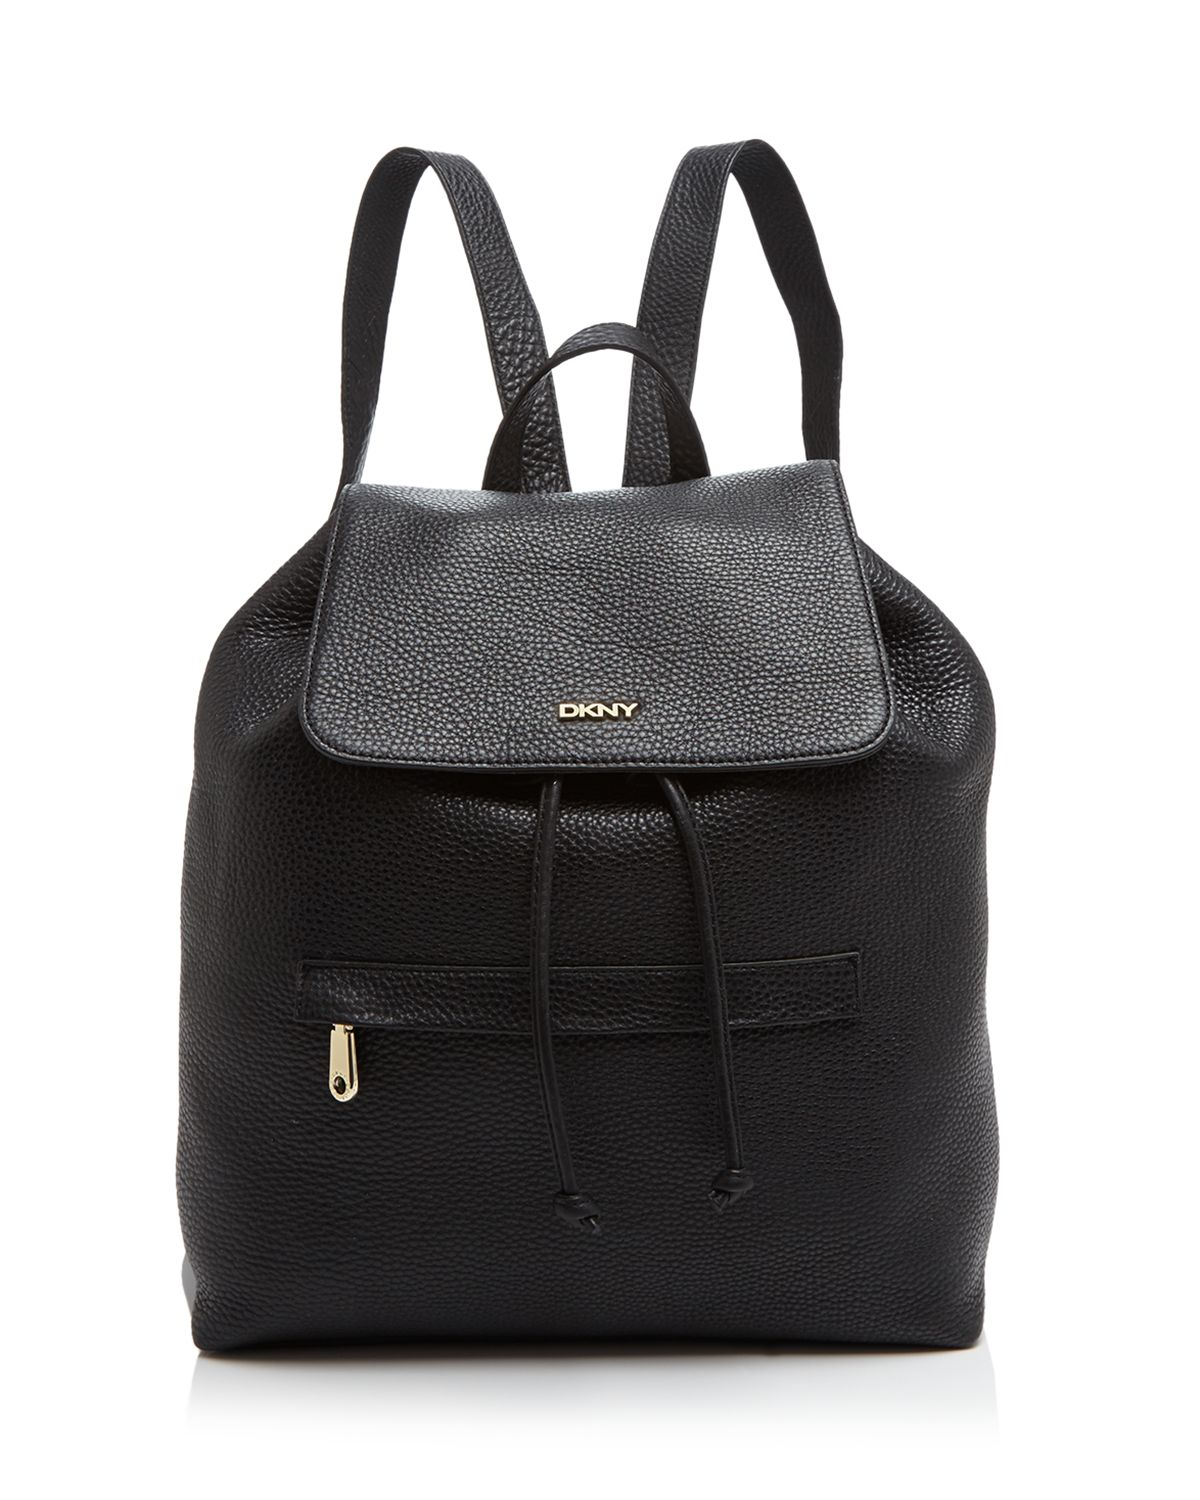 Lyst - Dkny Backpack - Tribeca in Black